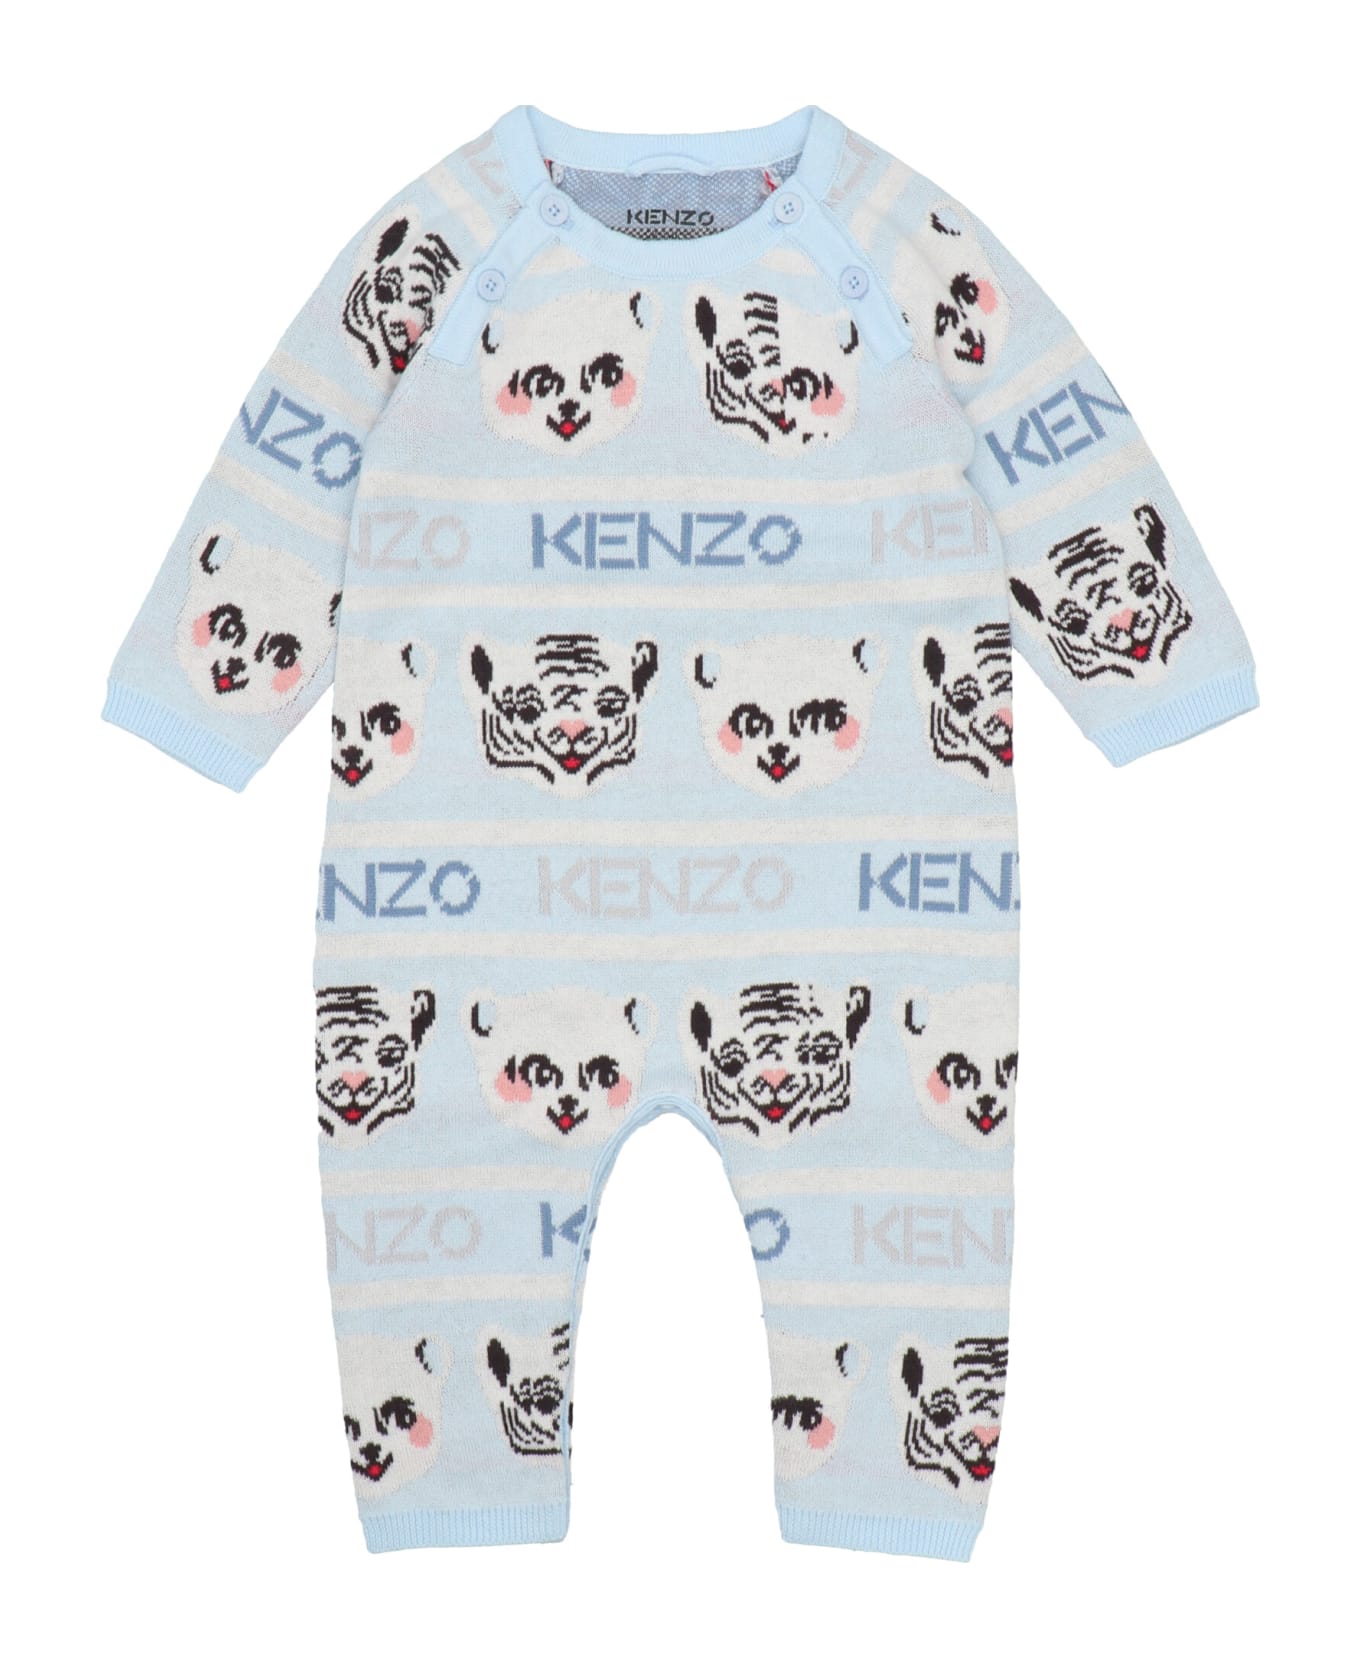 Kenzo Kids 'panda' Beanie Set - Light Blue